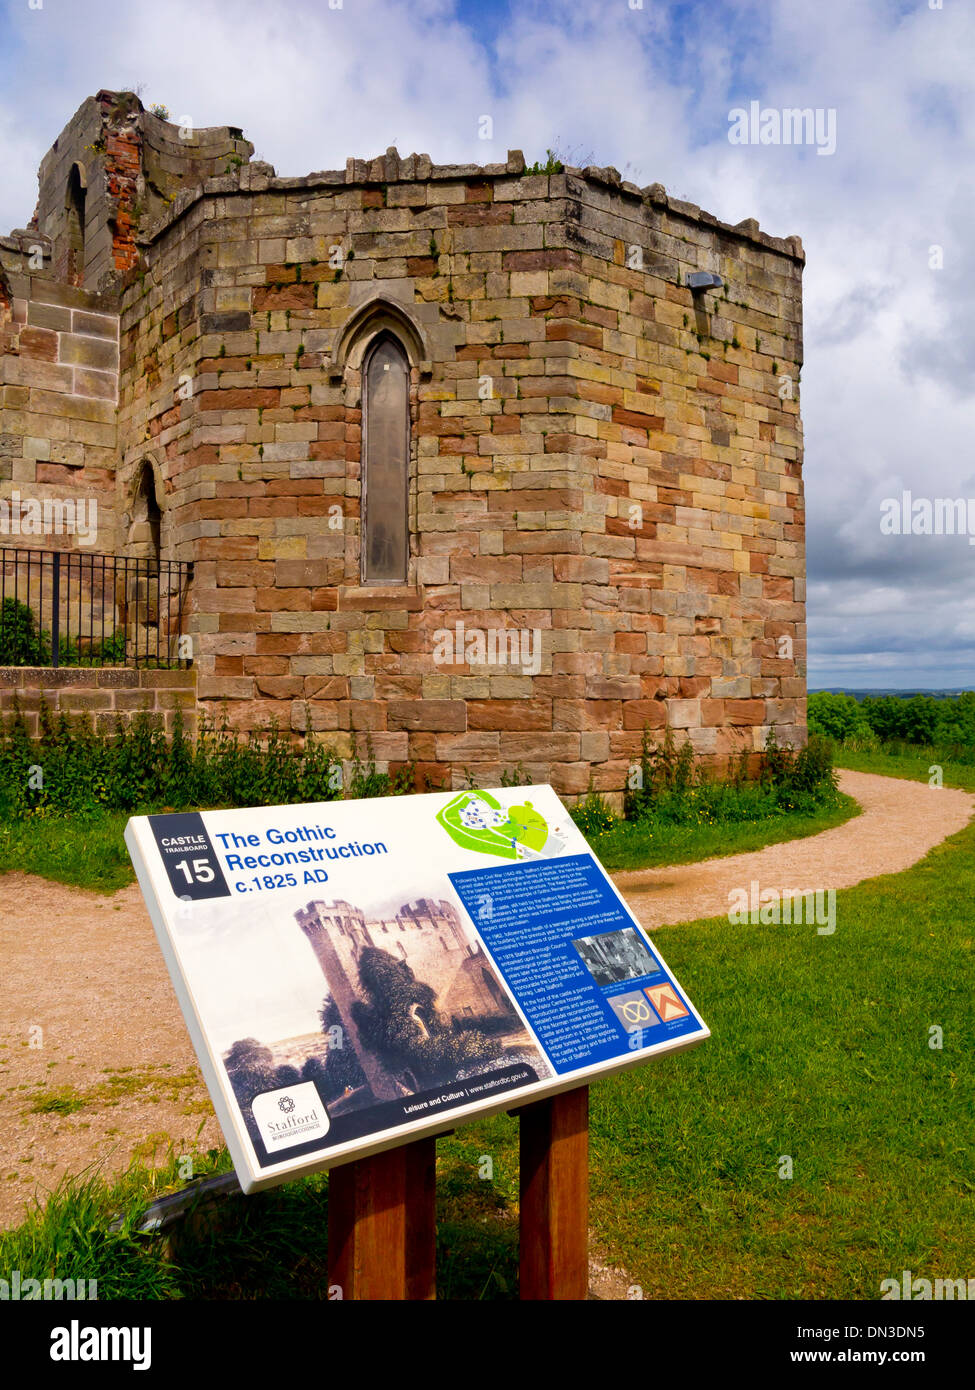 Interpretation sign Stafford Castle Staffordshire England UK a gothic revival stone keep based on original medieval foundations Stock Photo